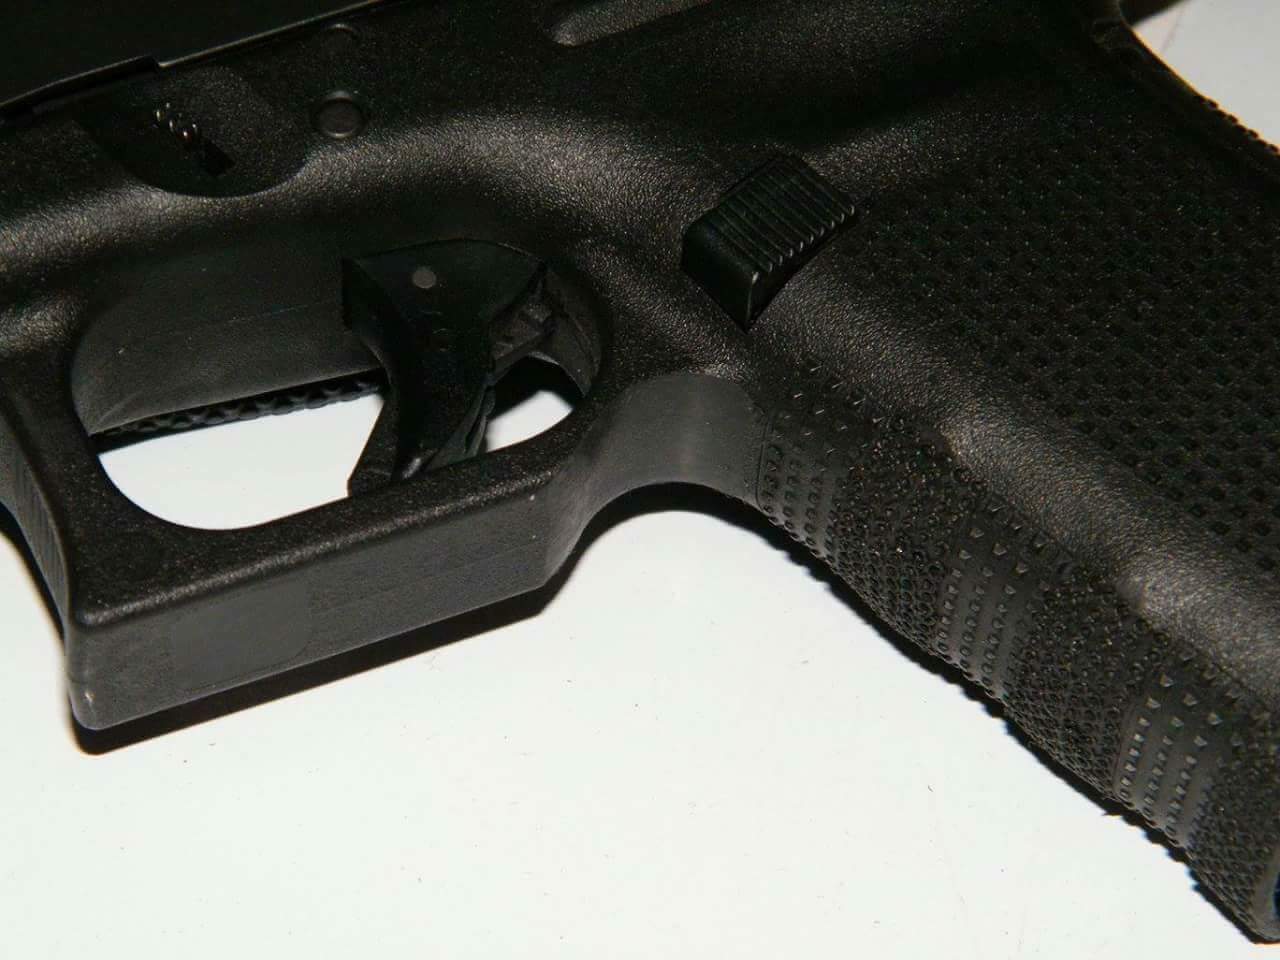 Glock - Single Trigger Guard Undercut Service